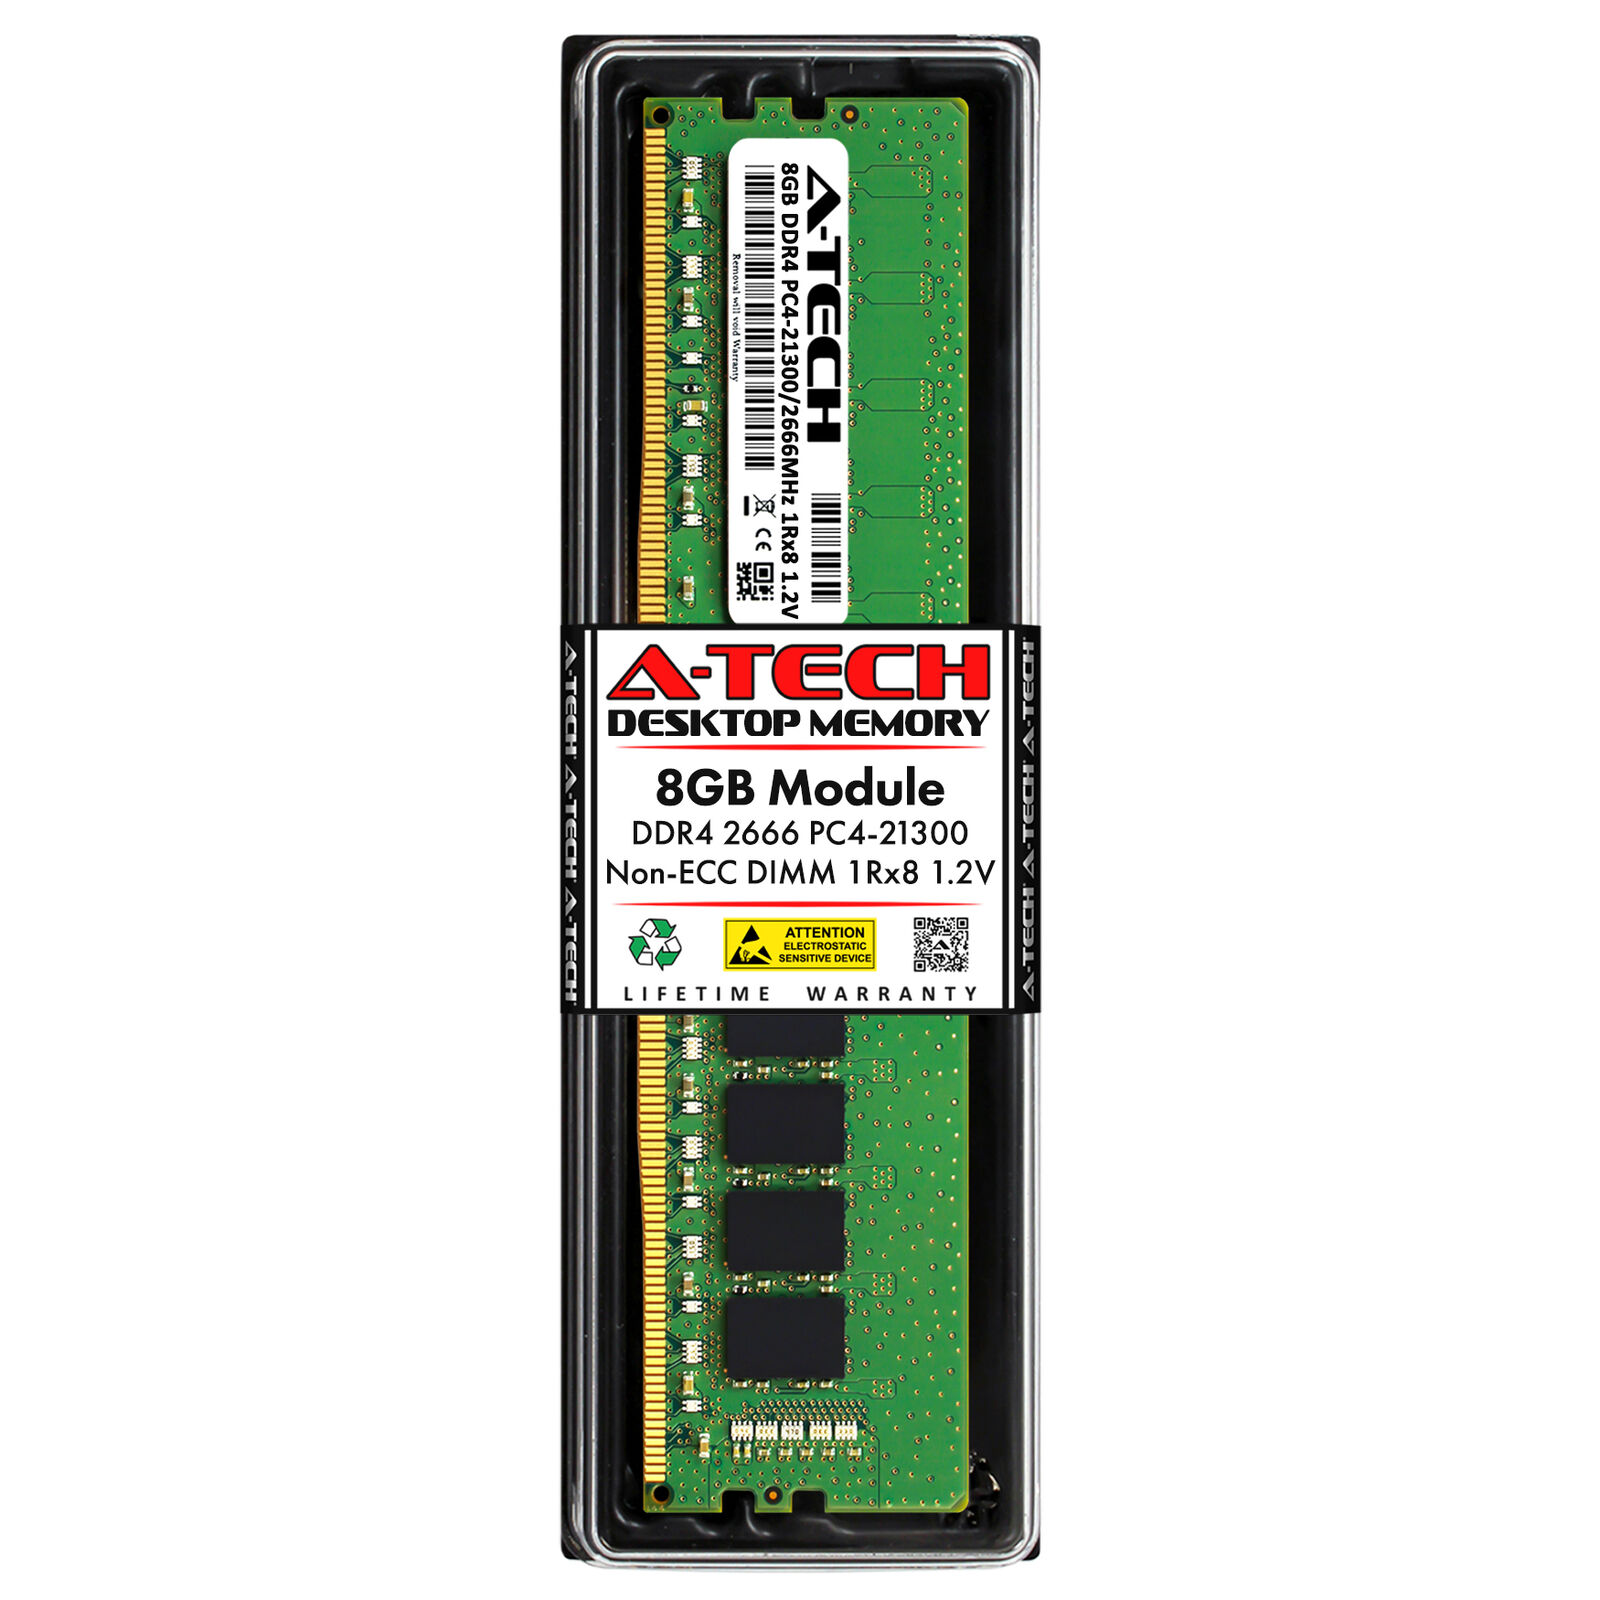 8GB DDR4 PC4-21300 2666MHz DIMM (SAMSUNG M378A1K43DB2-CTD Equivalent) Memory RAM